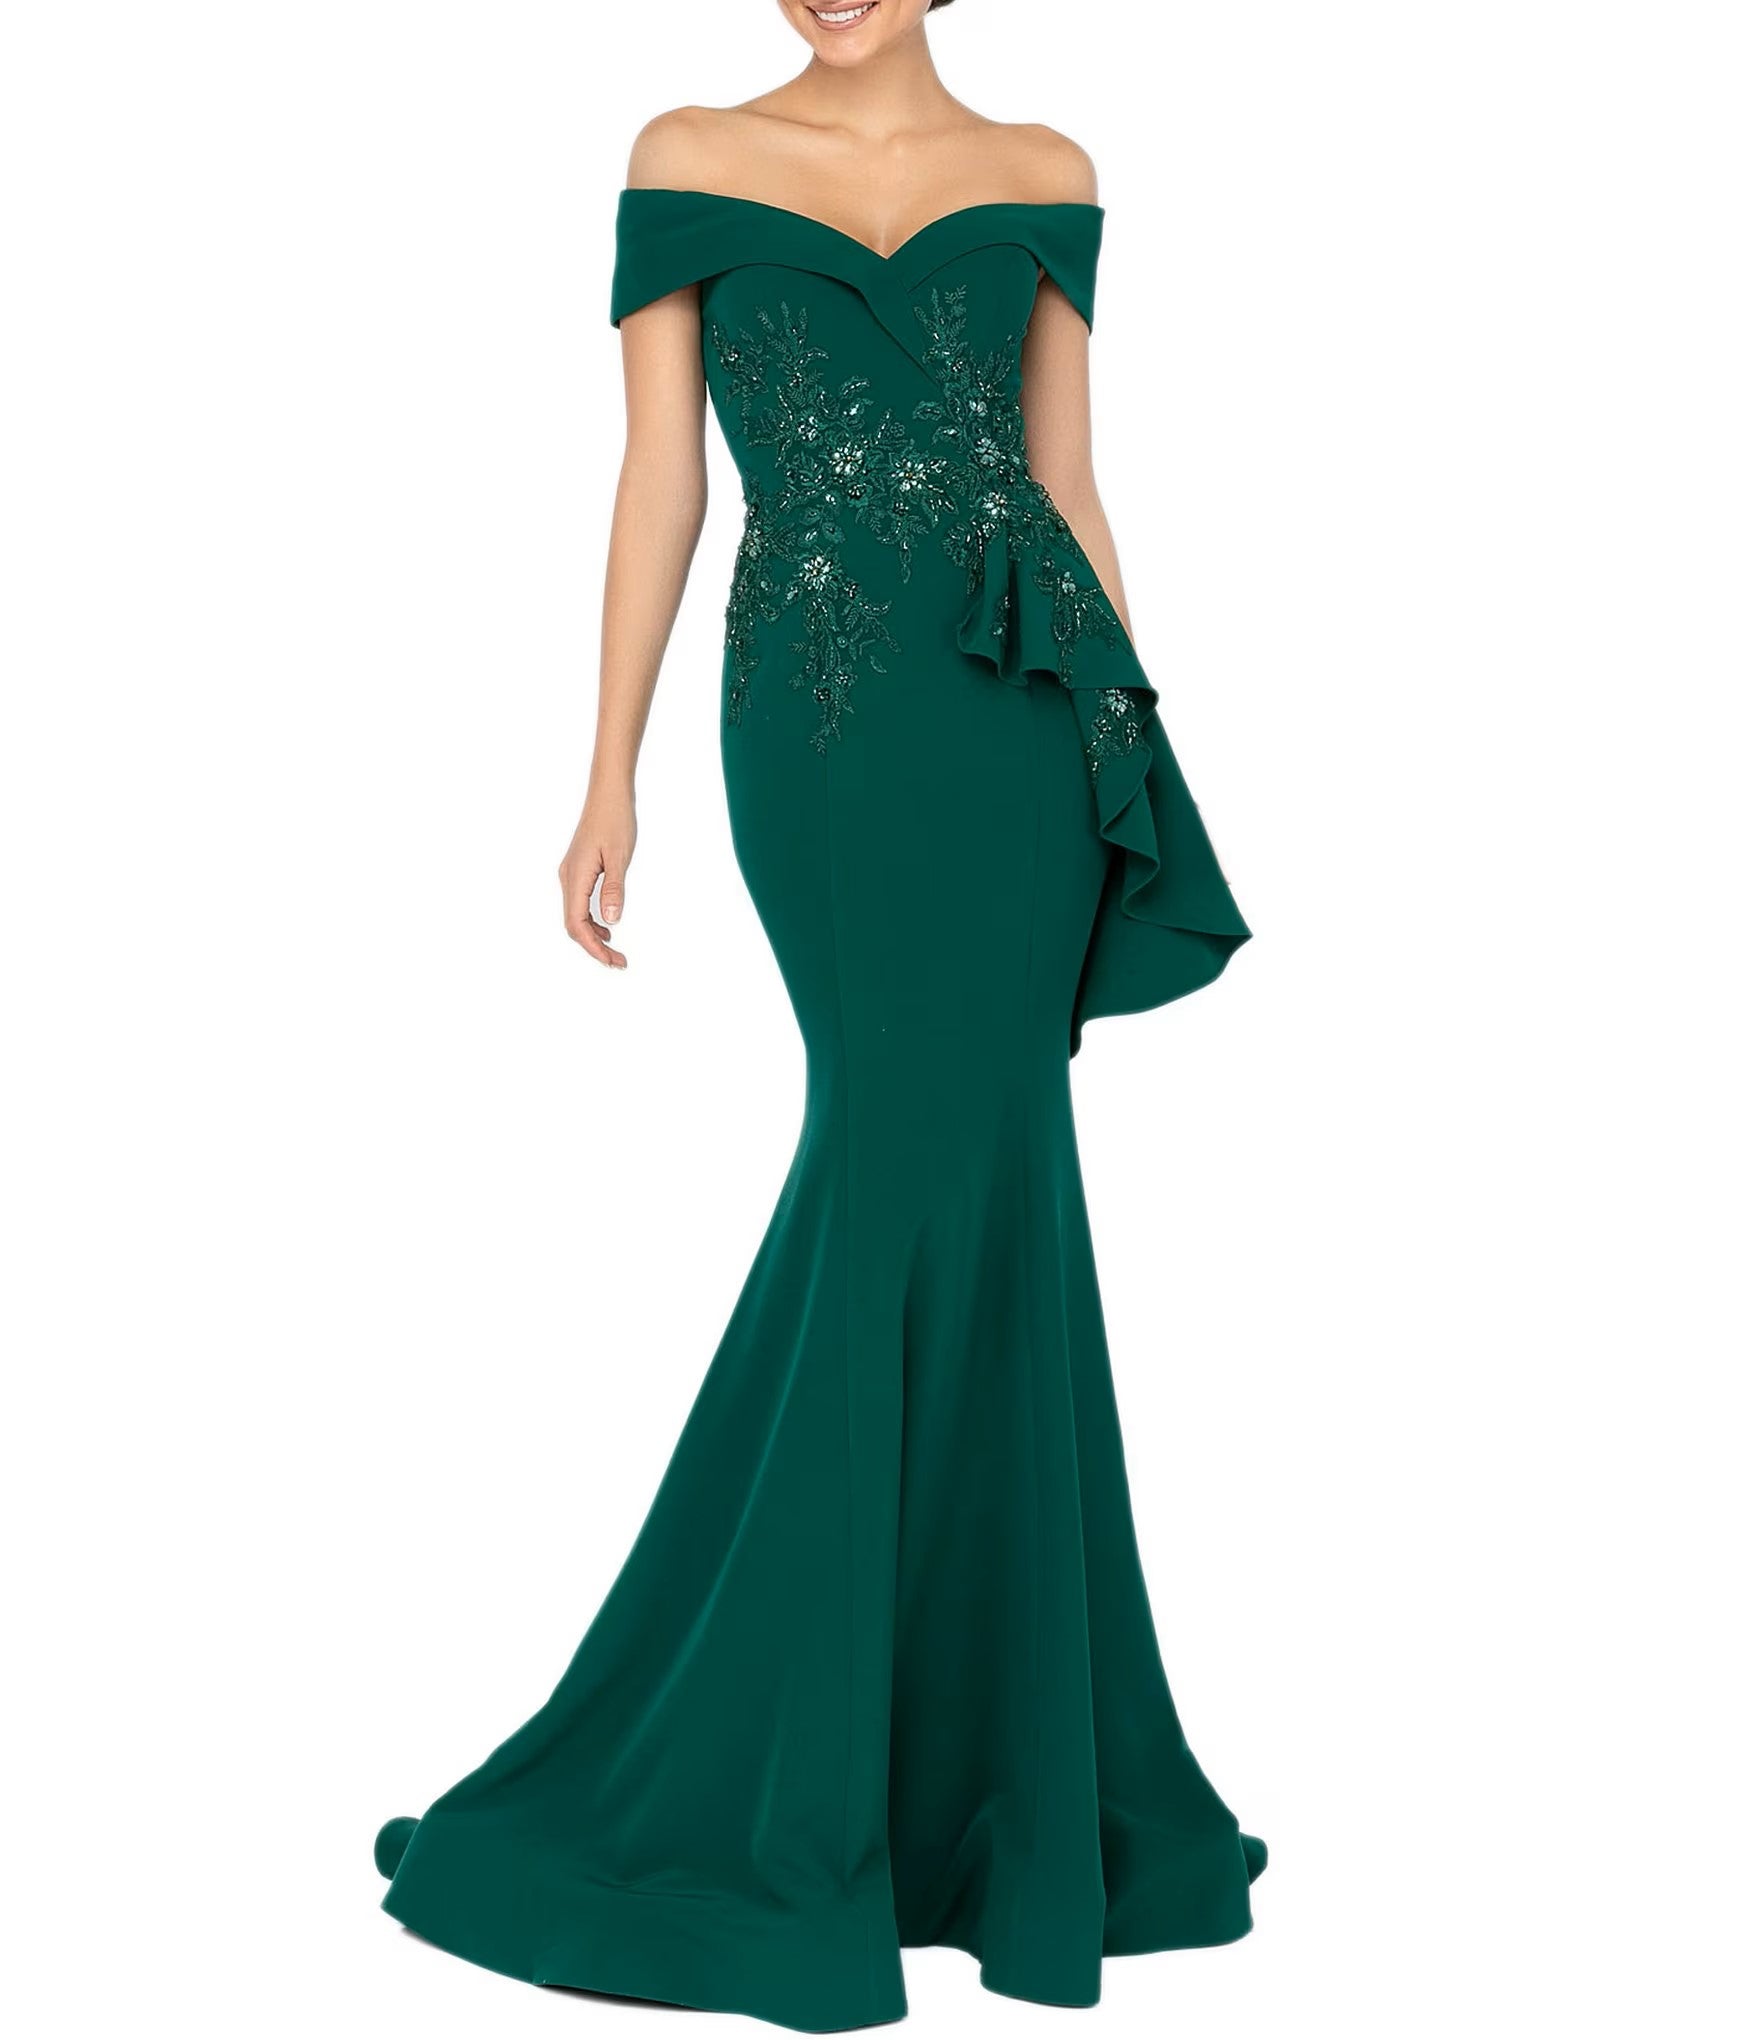 Terani Couture - Emerald Green Off Shoulder Side Drape Peplum Mermaid Gown